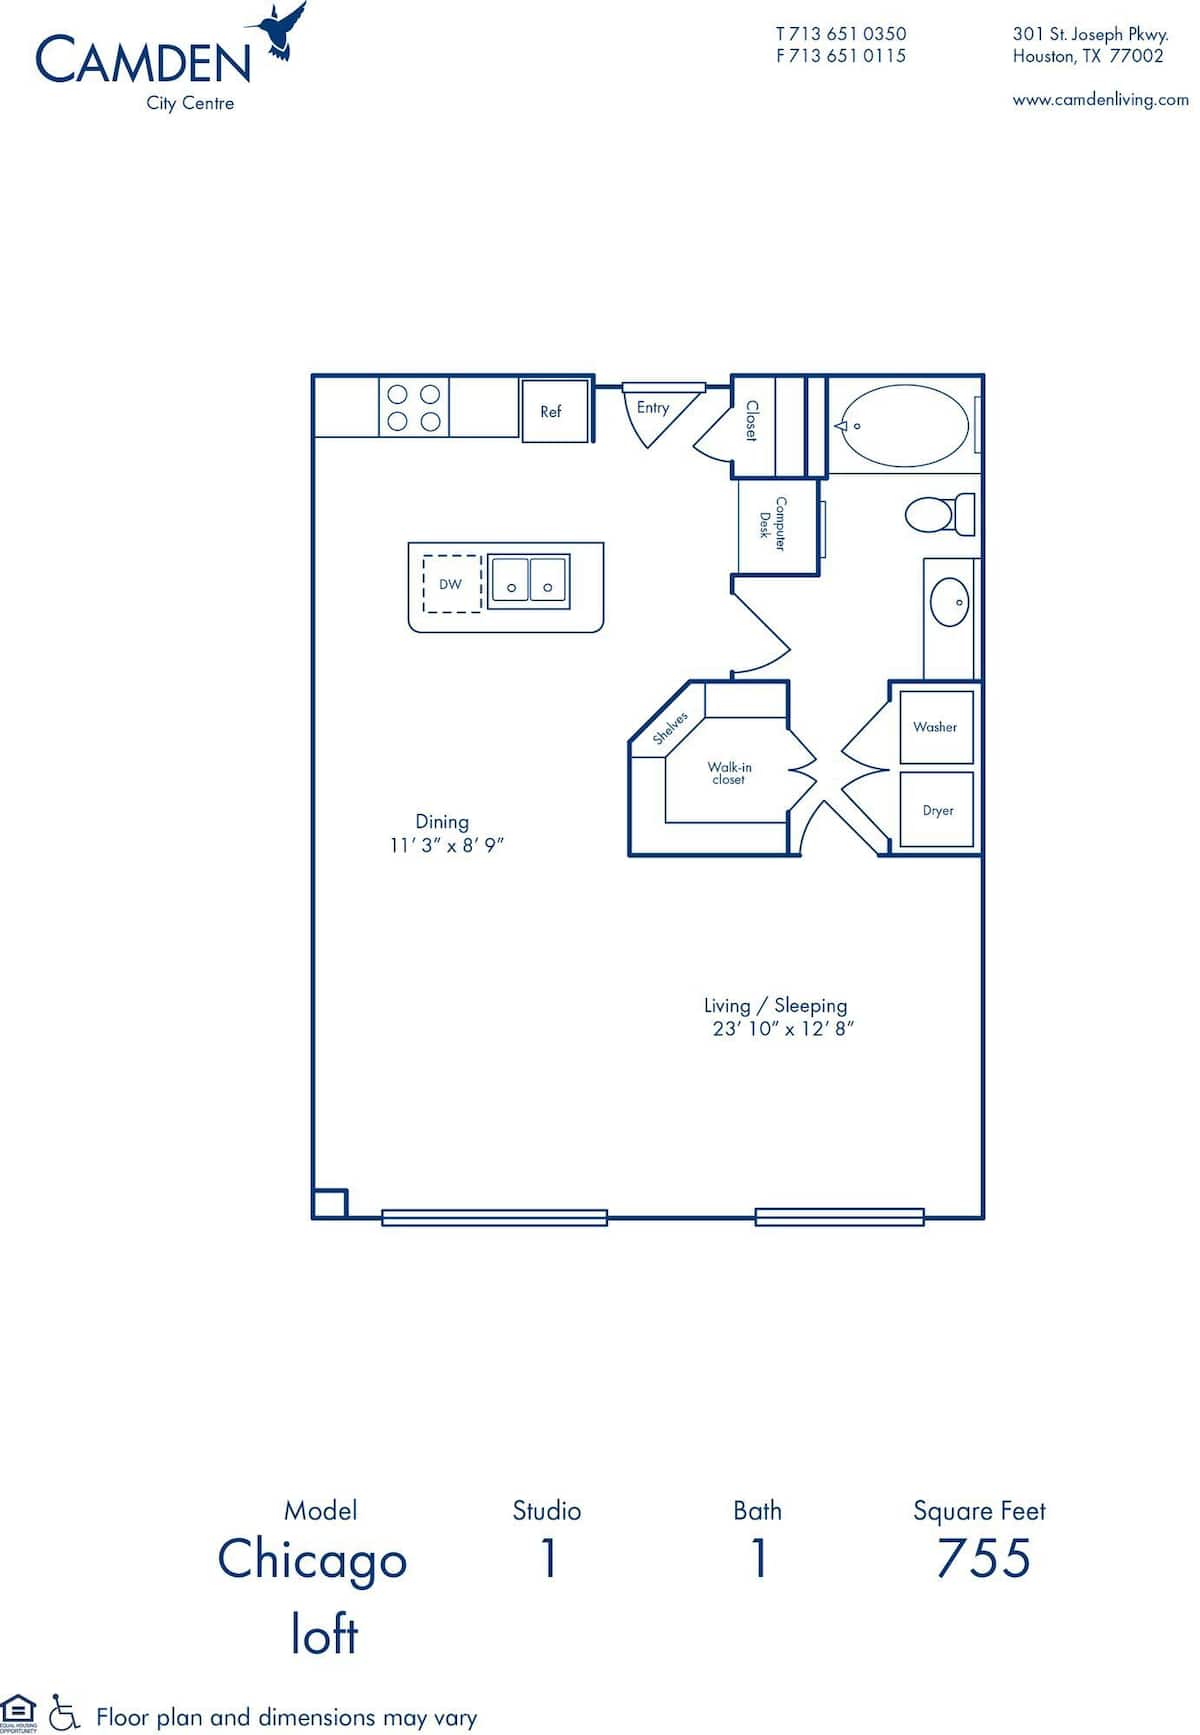 Floorplan diagram for Chicago, showing Studio